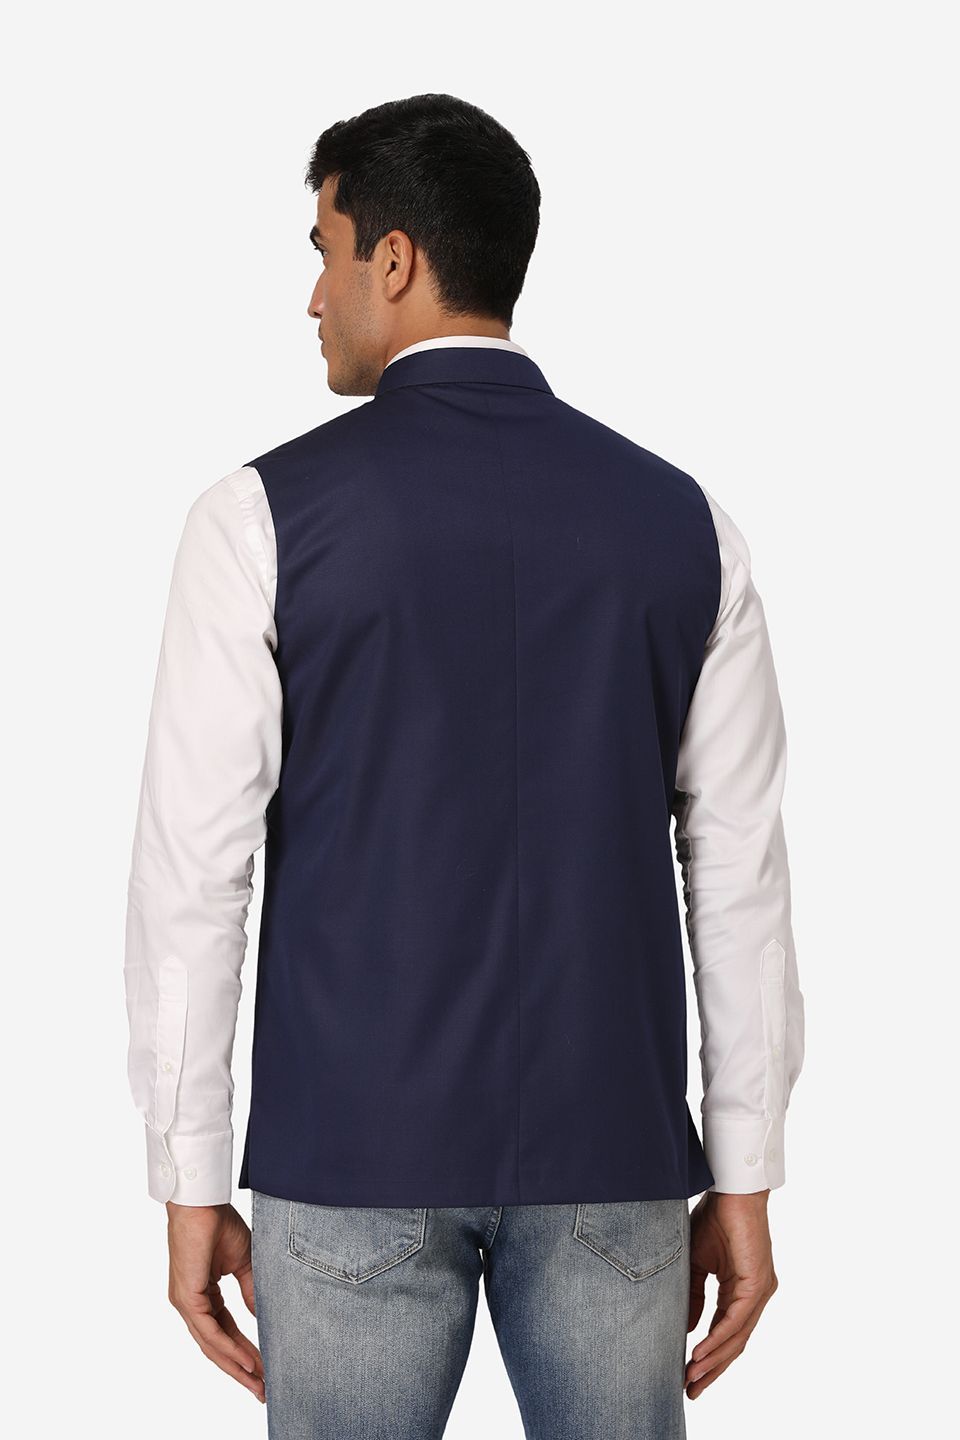 Wintage Men's Poly Cotton Festive and Casual Nehru Jacket Vest Waistcoat : Navy Blue